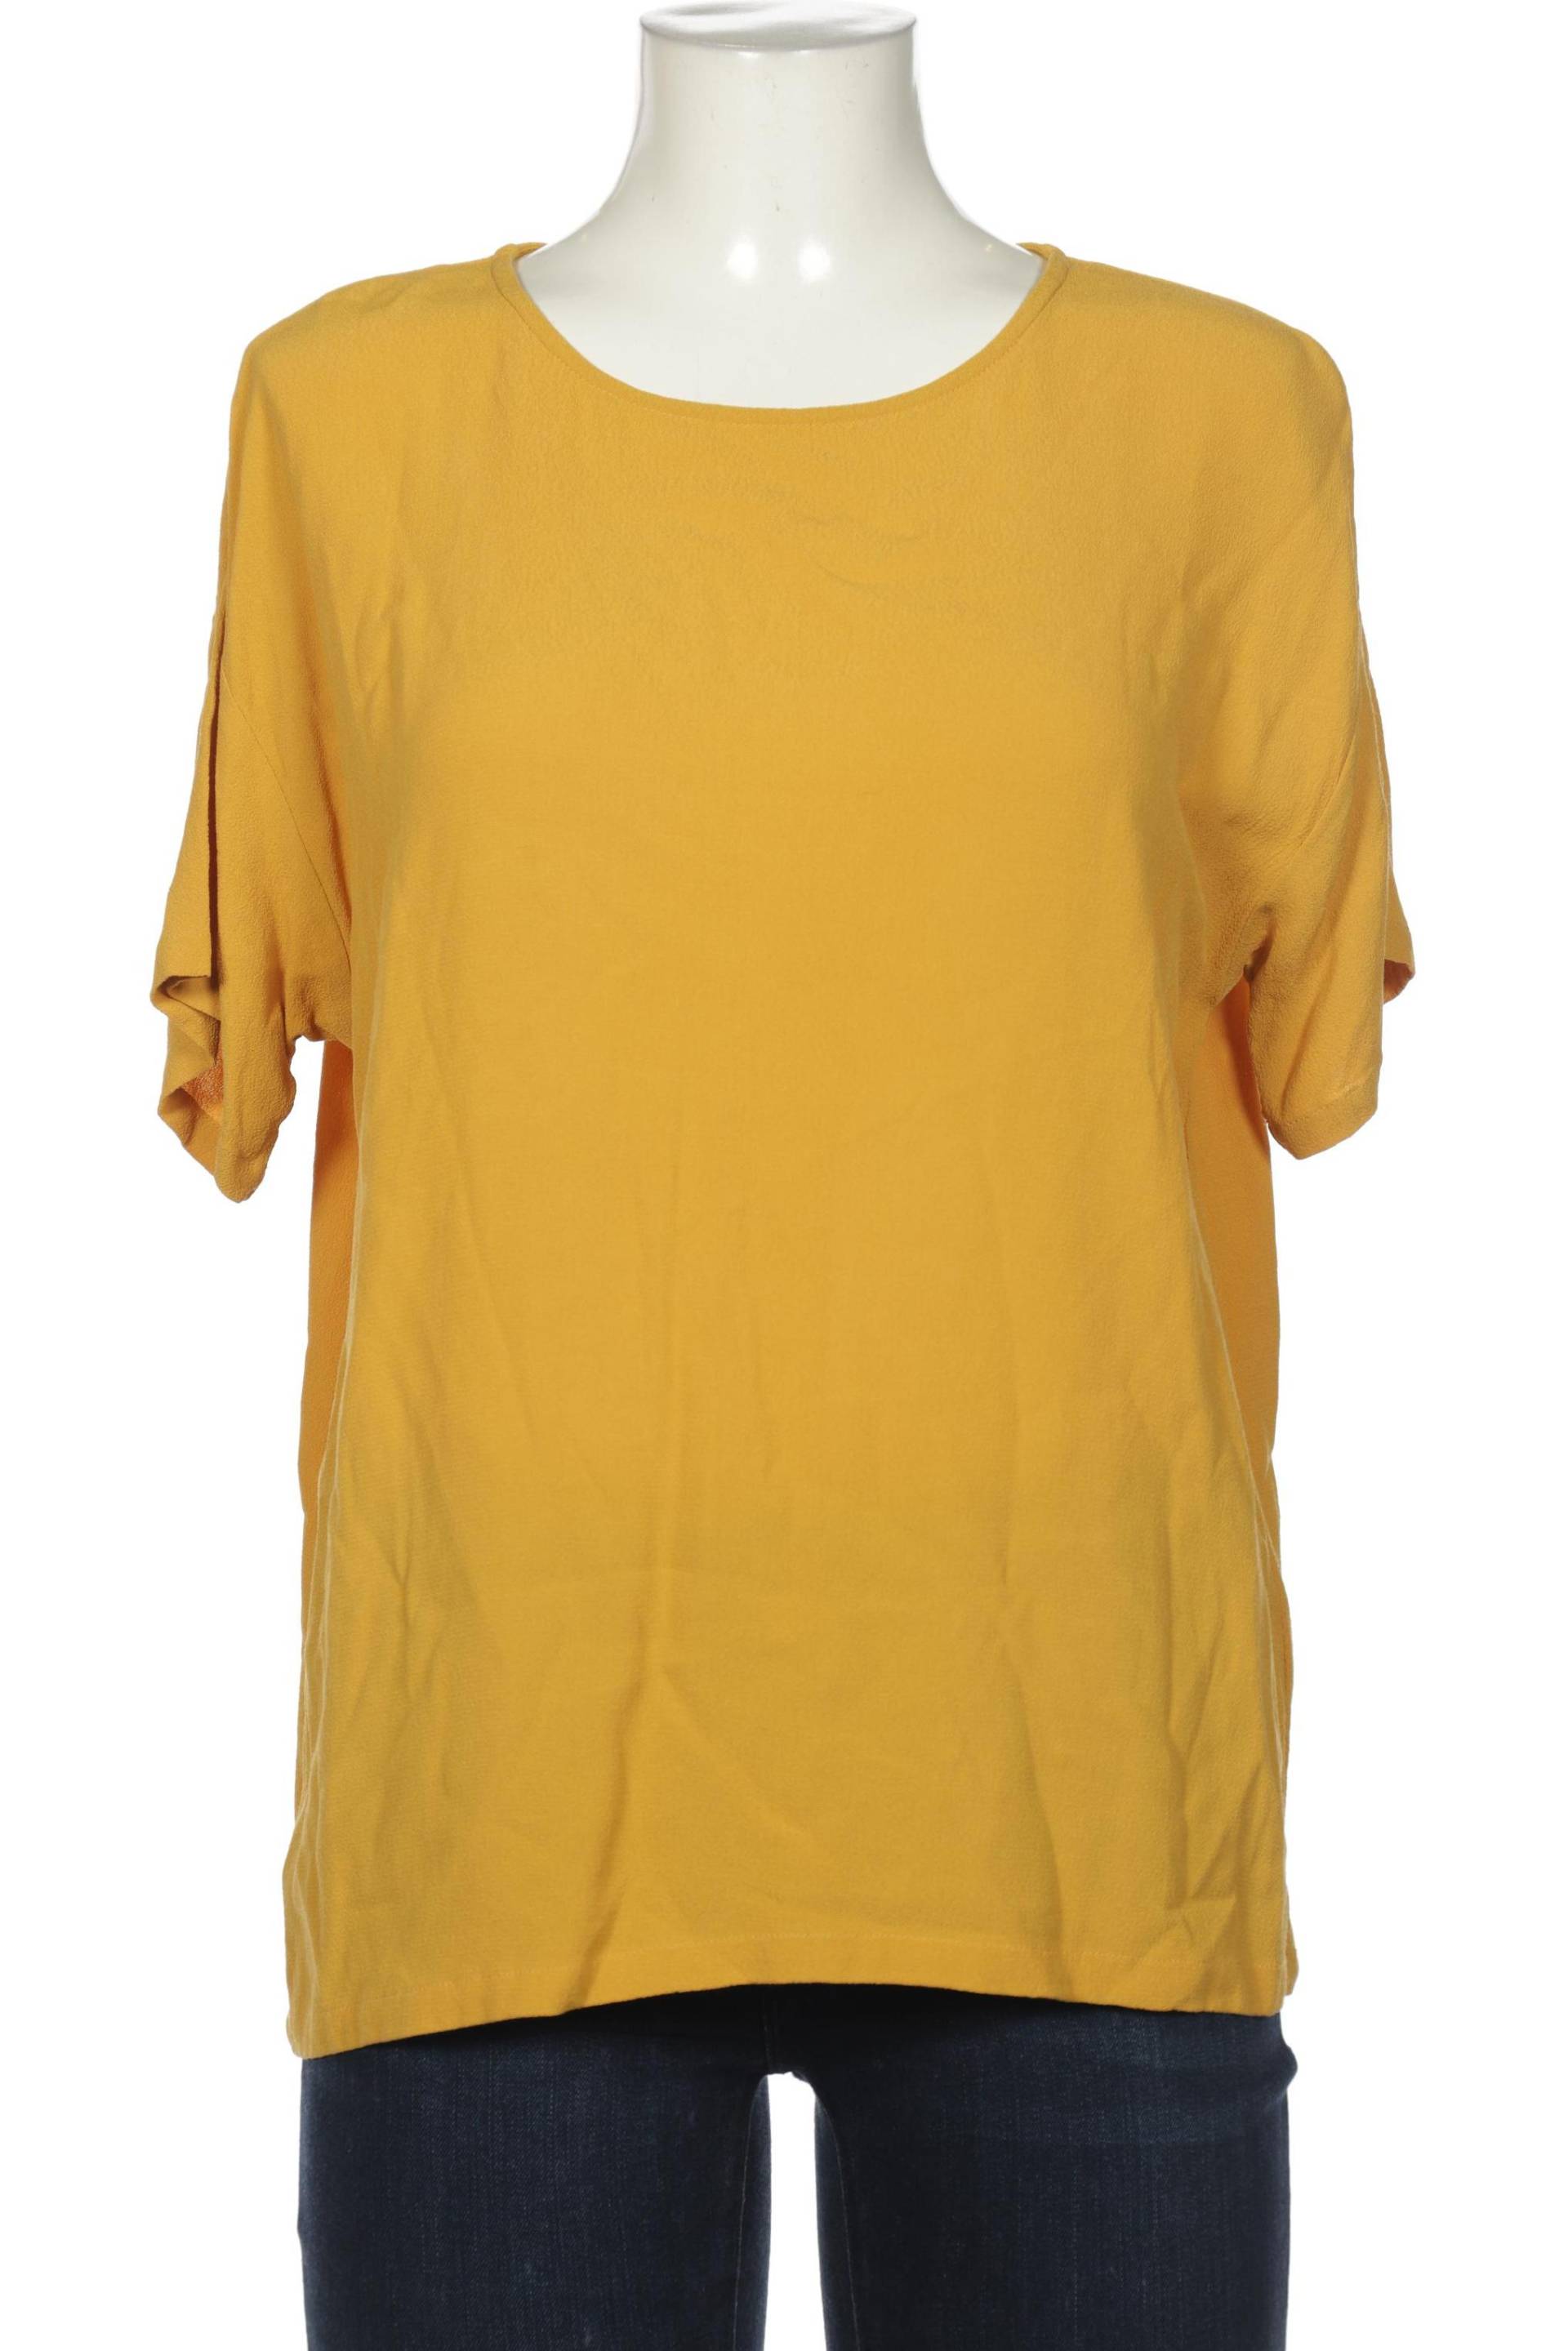 Modstroem Damen Bluse, gelb, Gr. 38 von Modstroem